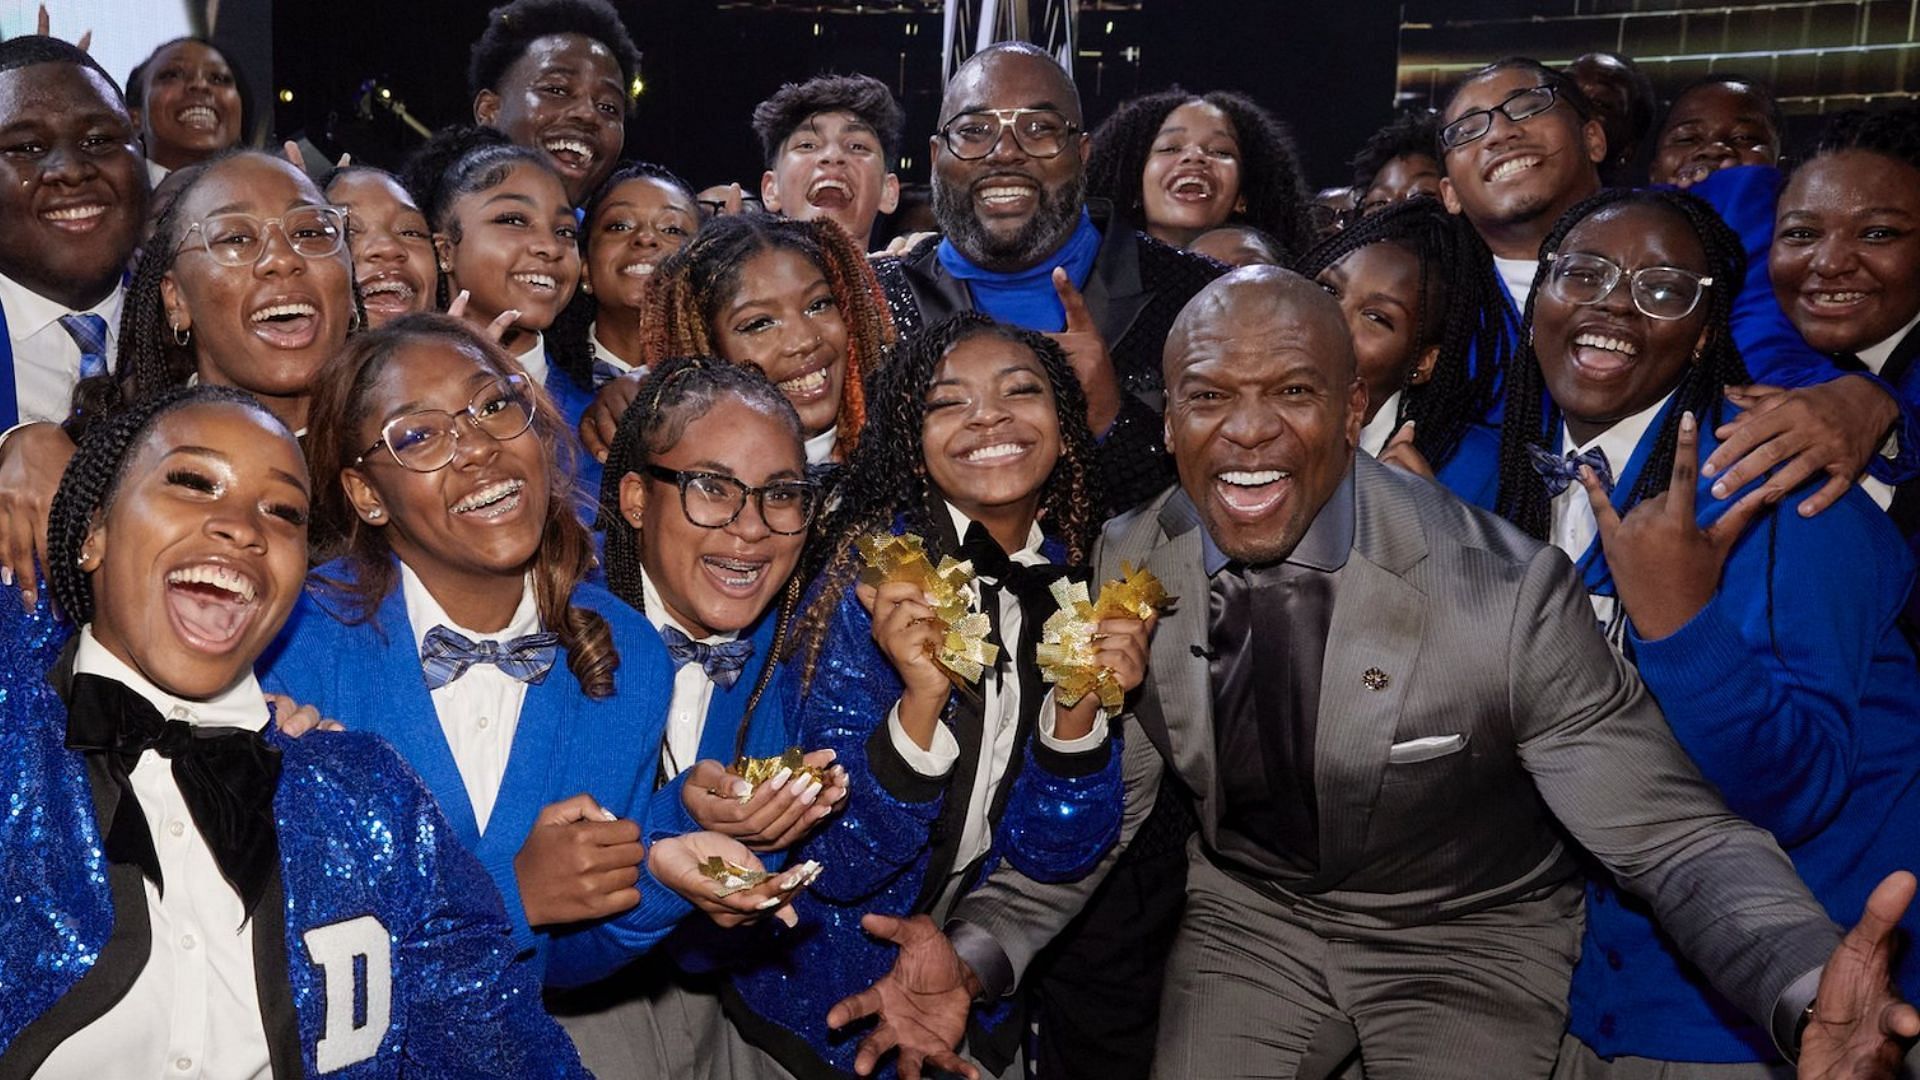 Detroit Youth Choir get their second golden buzzer on AGT: All-Stars